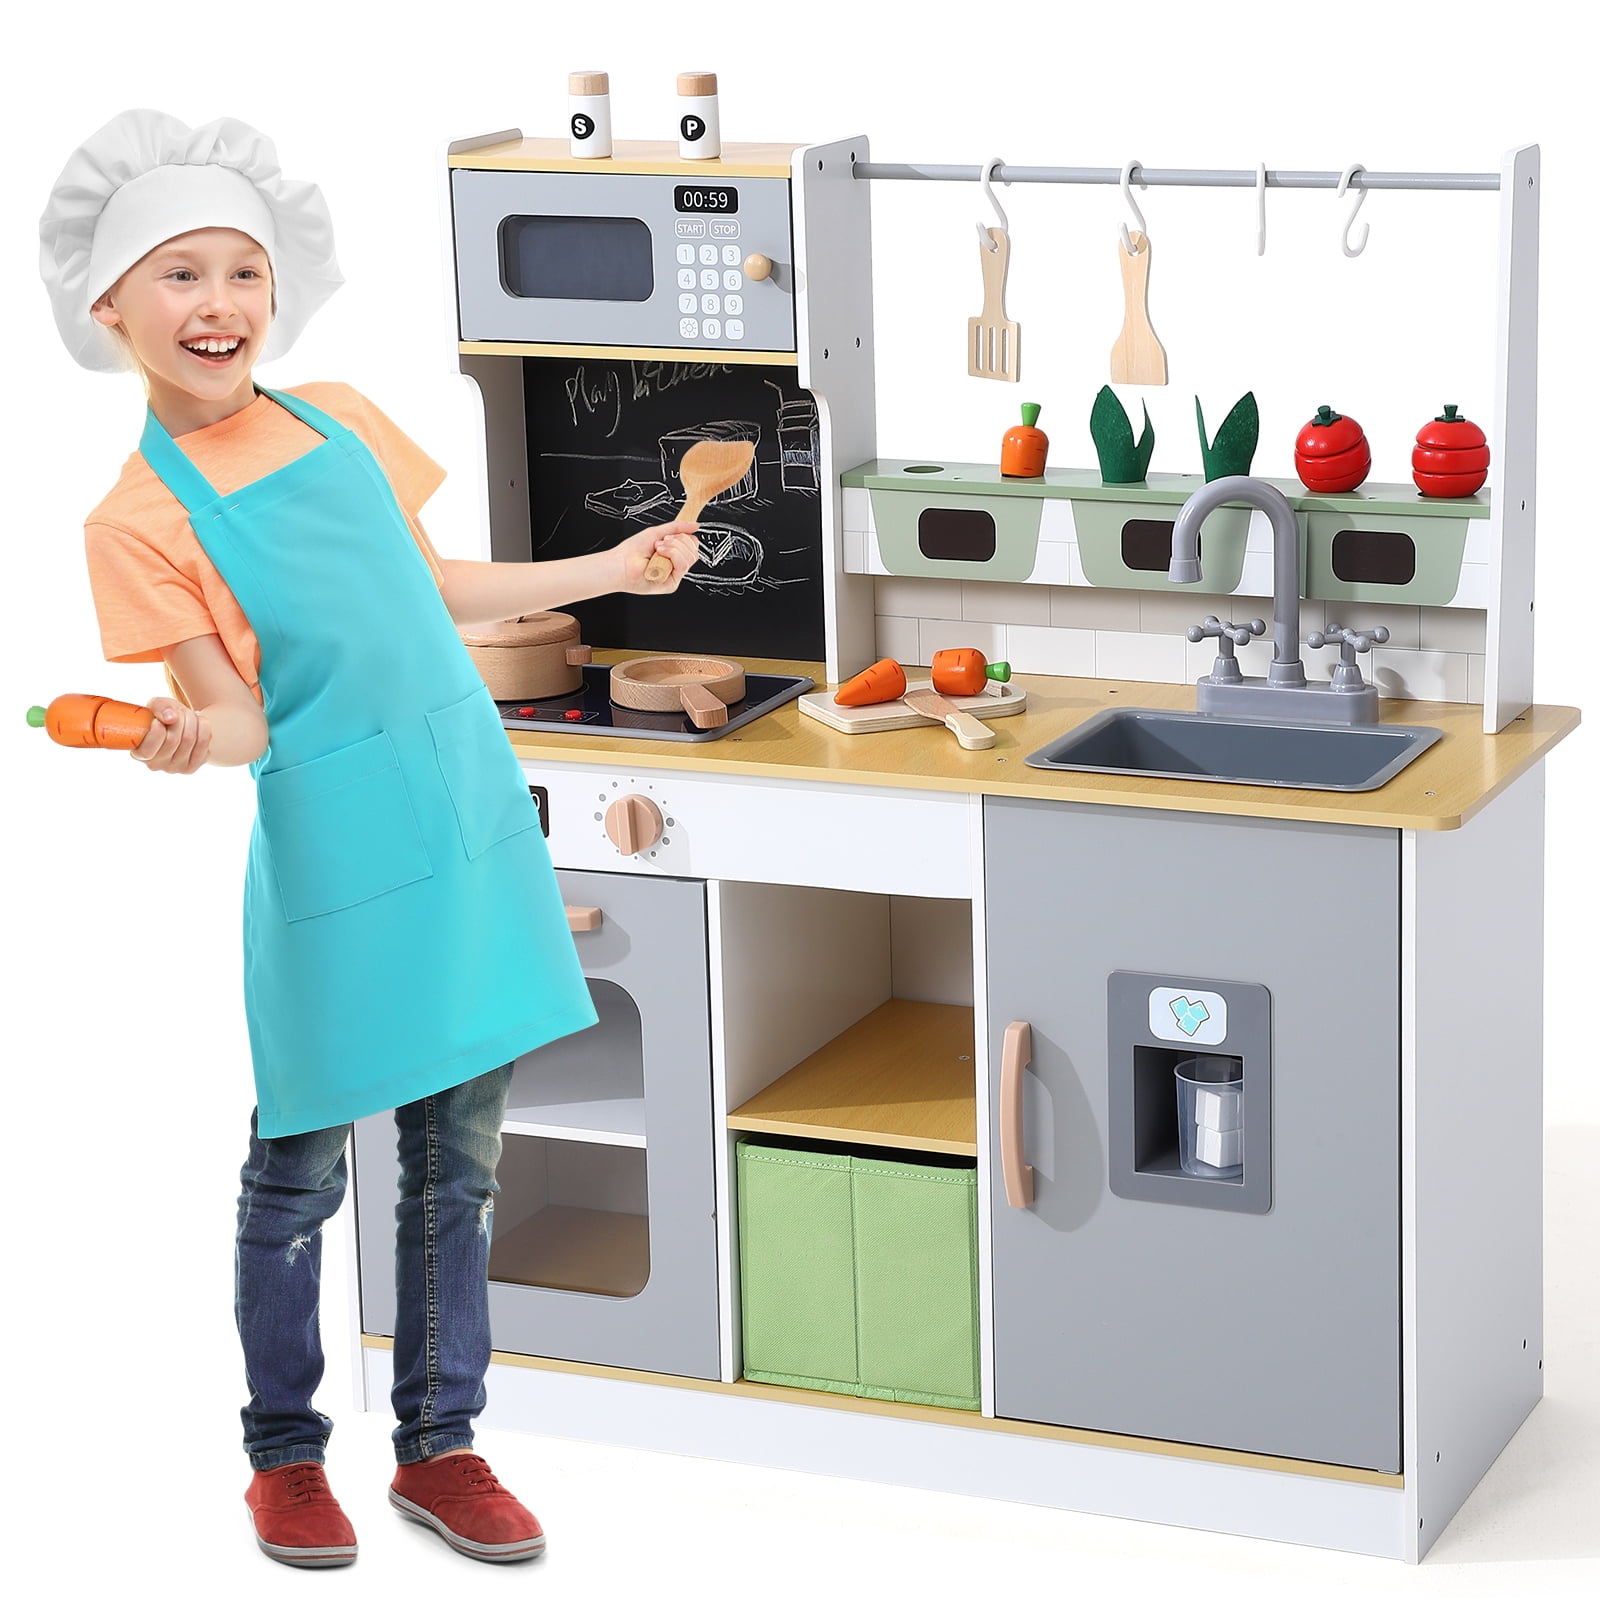 Reduced-price allergy-friendly kitchen appliances